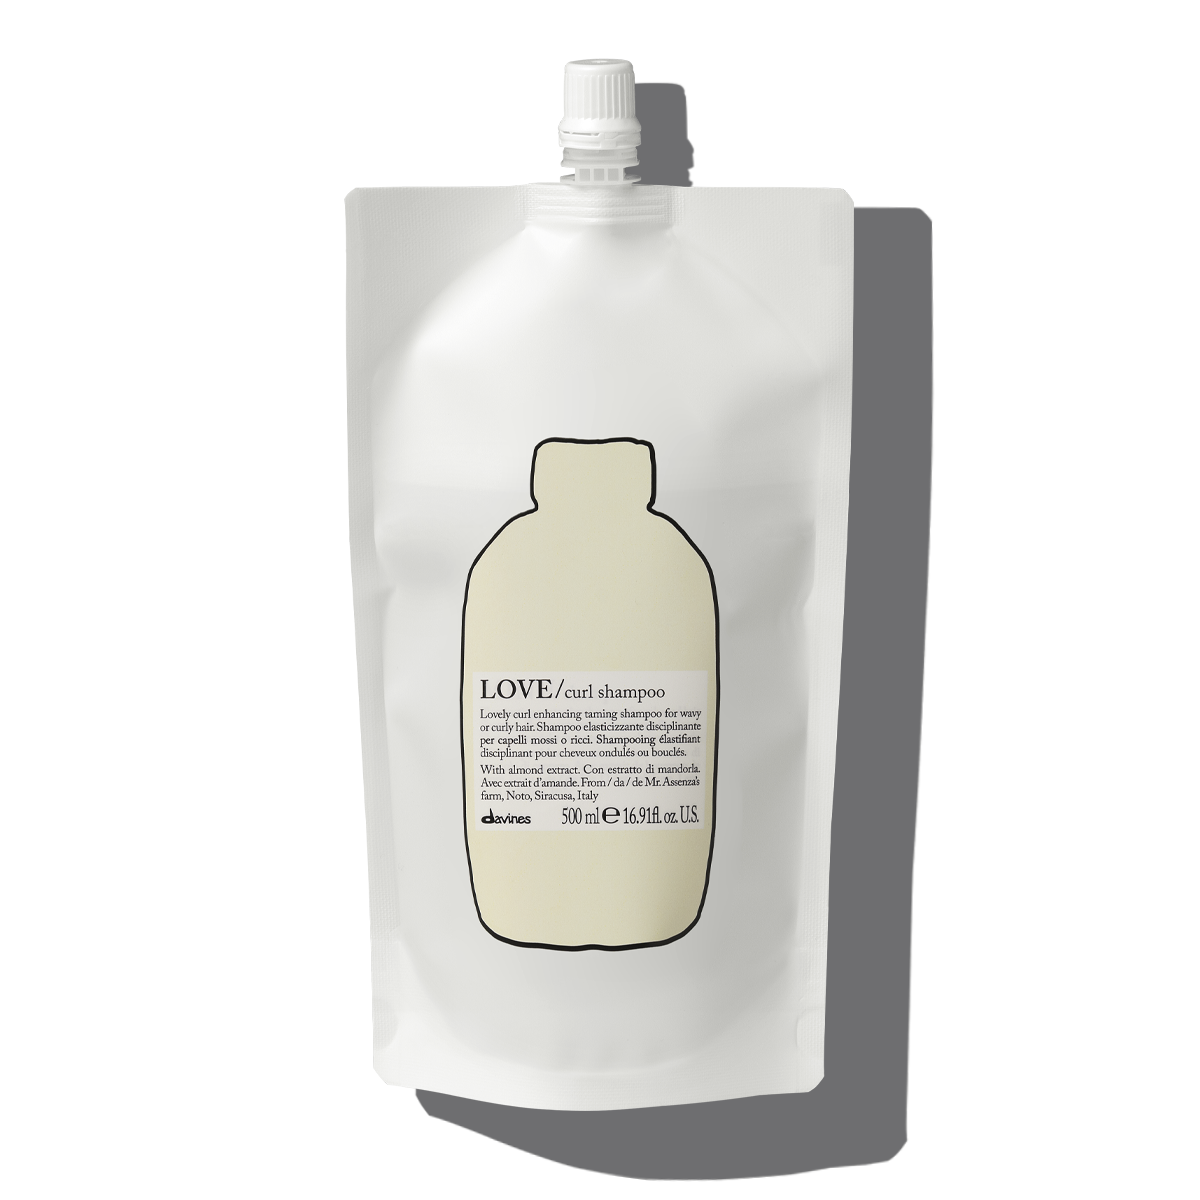 LOVE CURL Shampoo 500 ml refill 1  500 mlDavines
